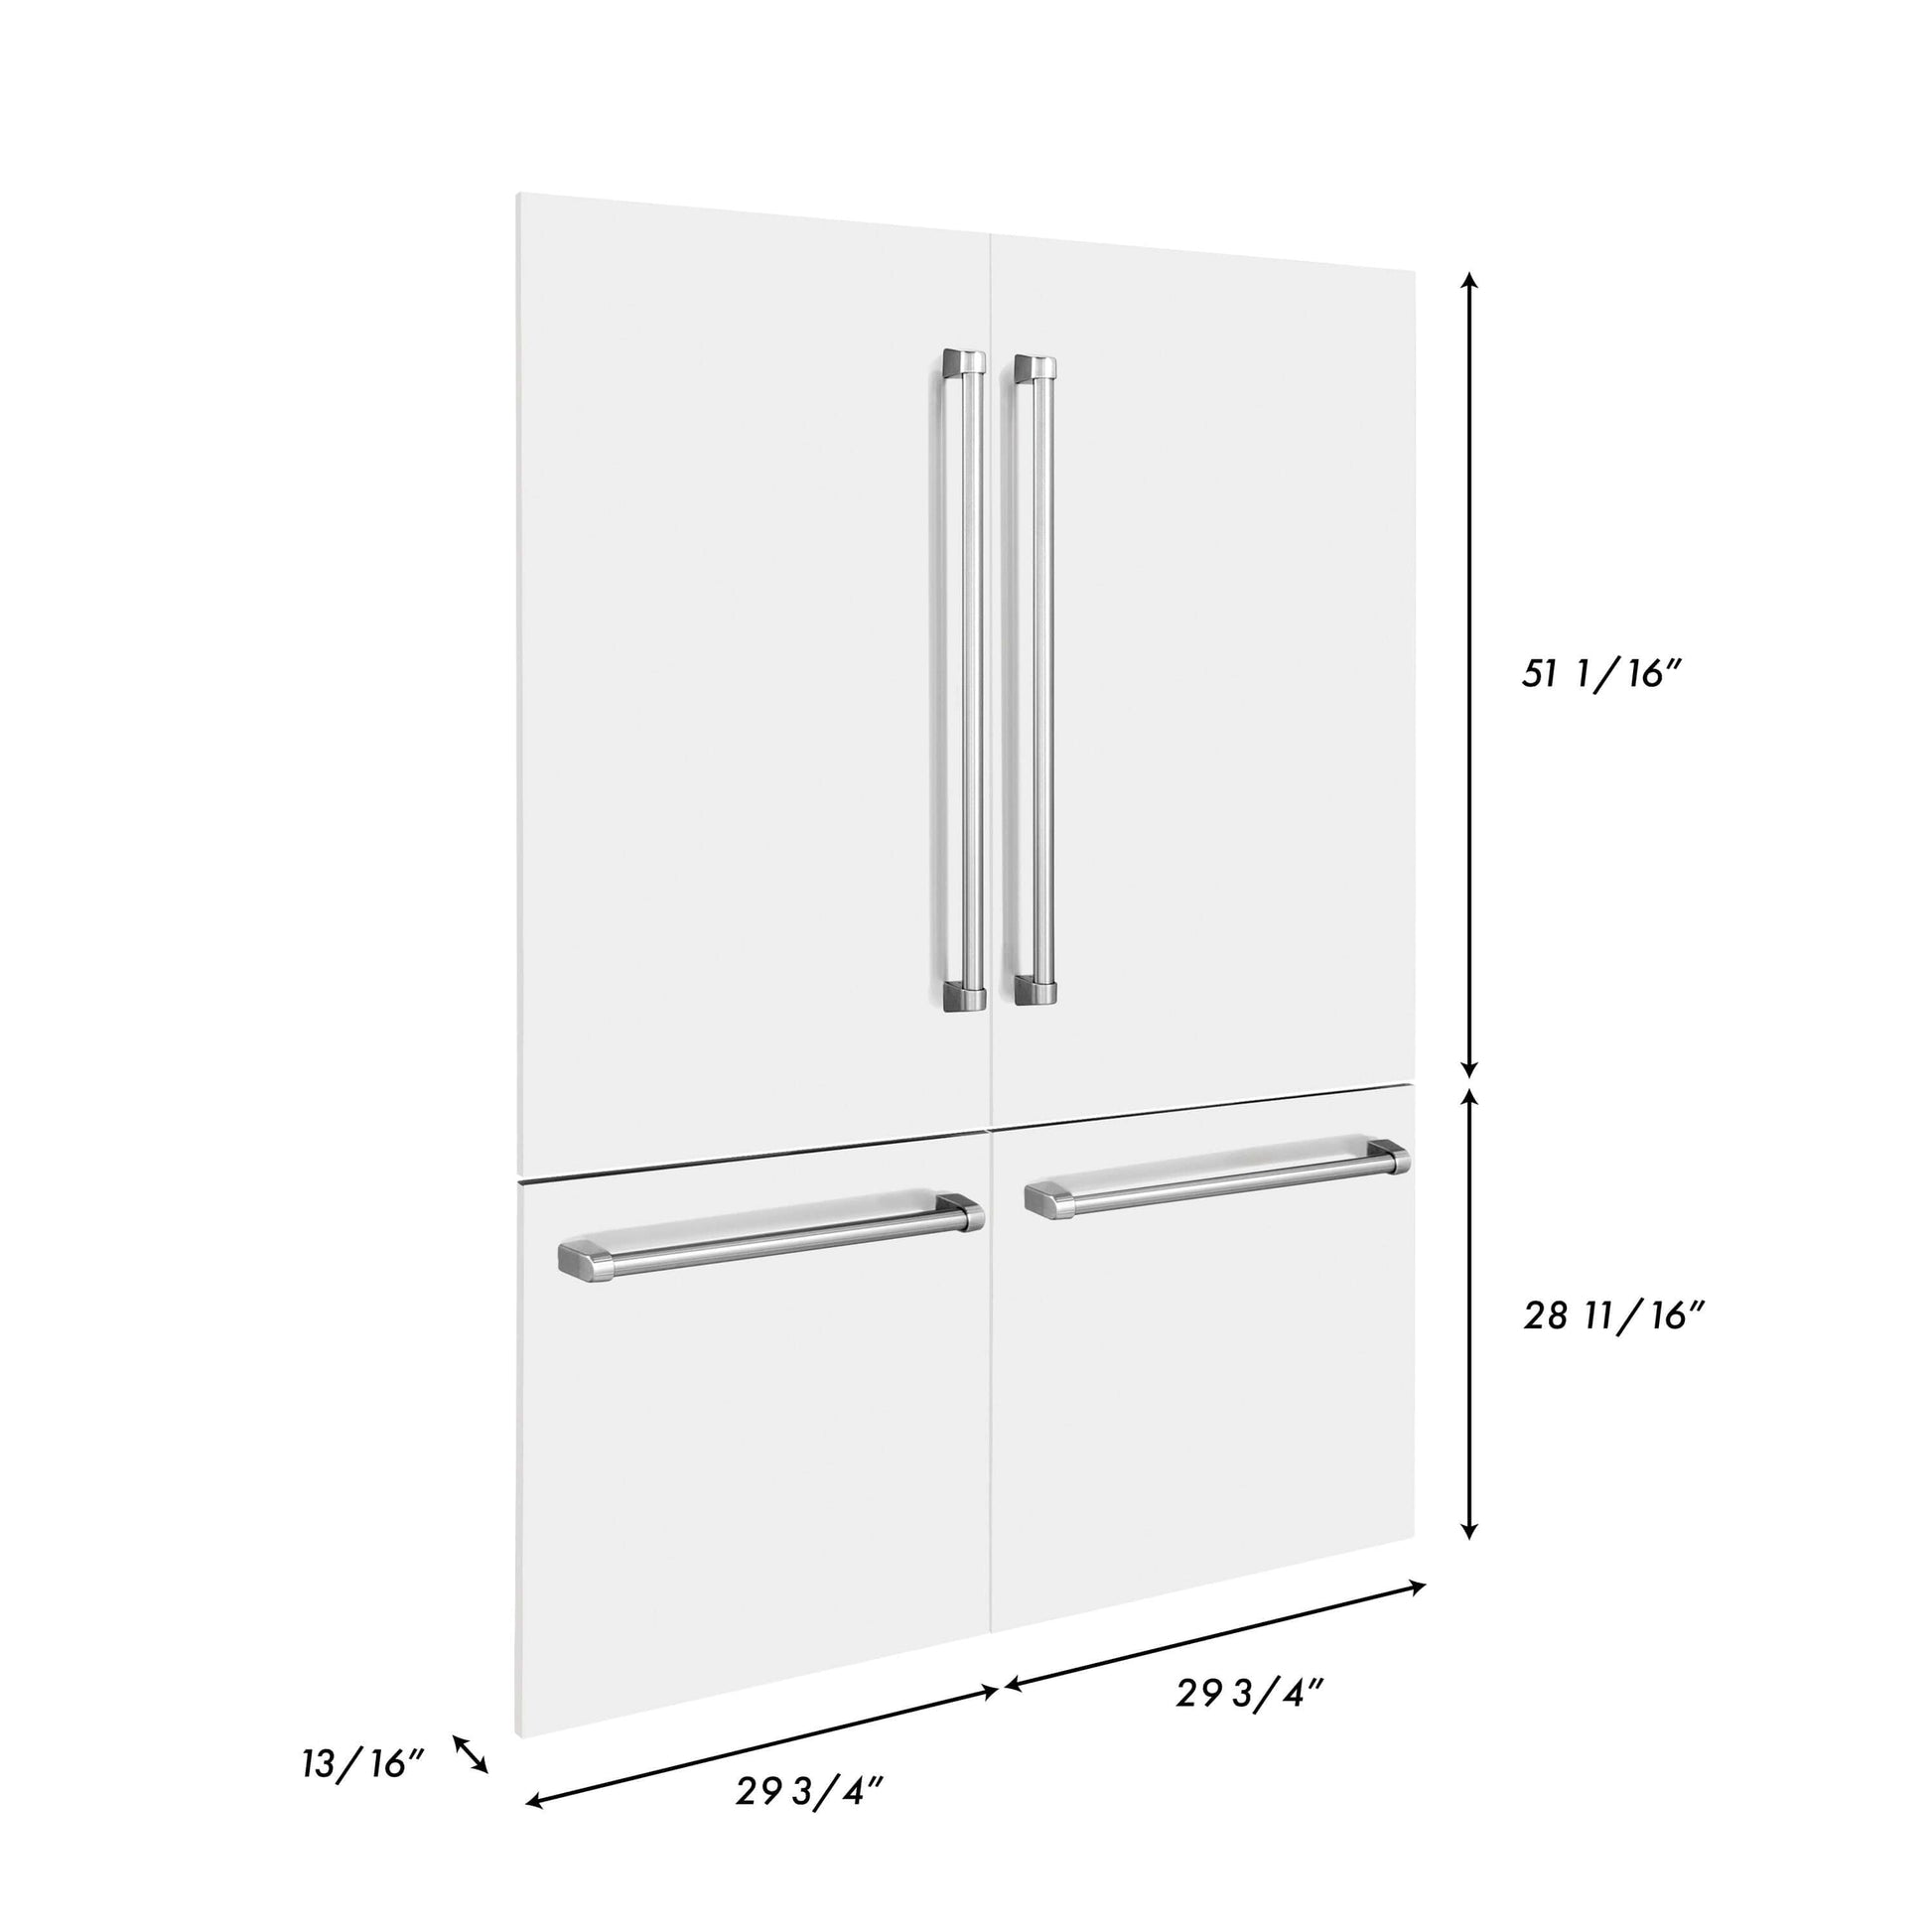 Panels & Handles Only - ZLINE 60" Refrigerator Panels in Matte White